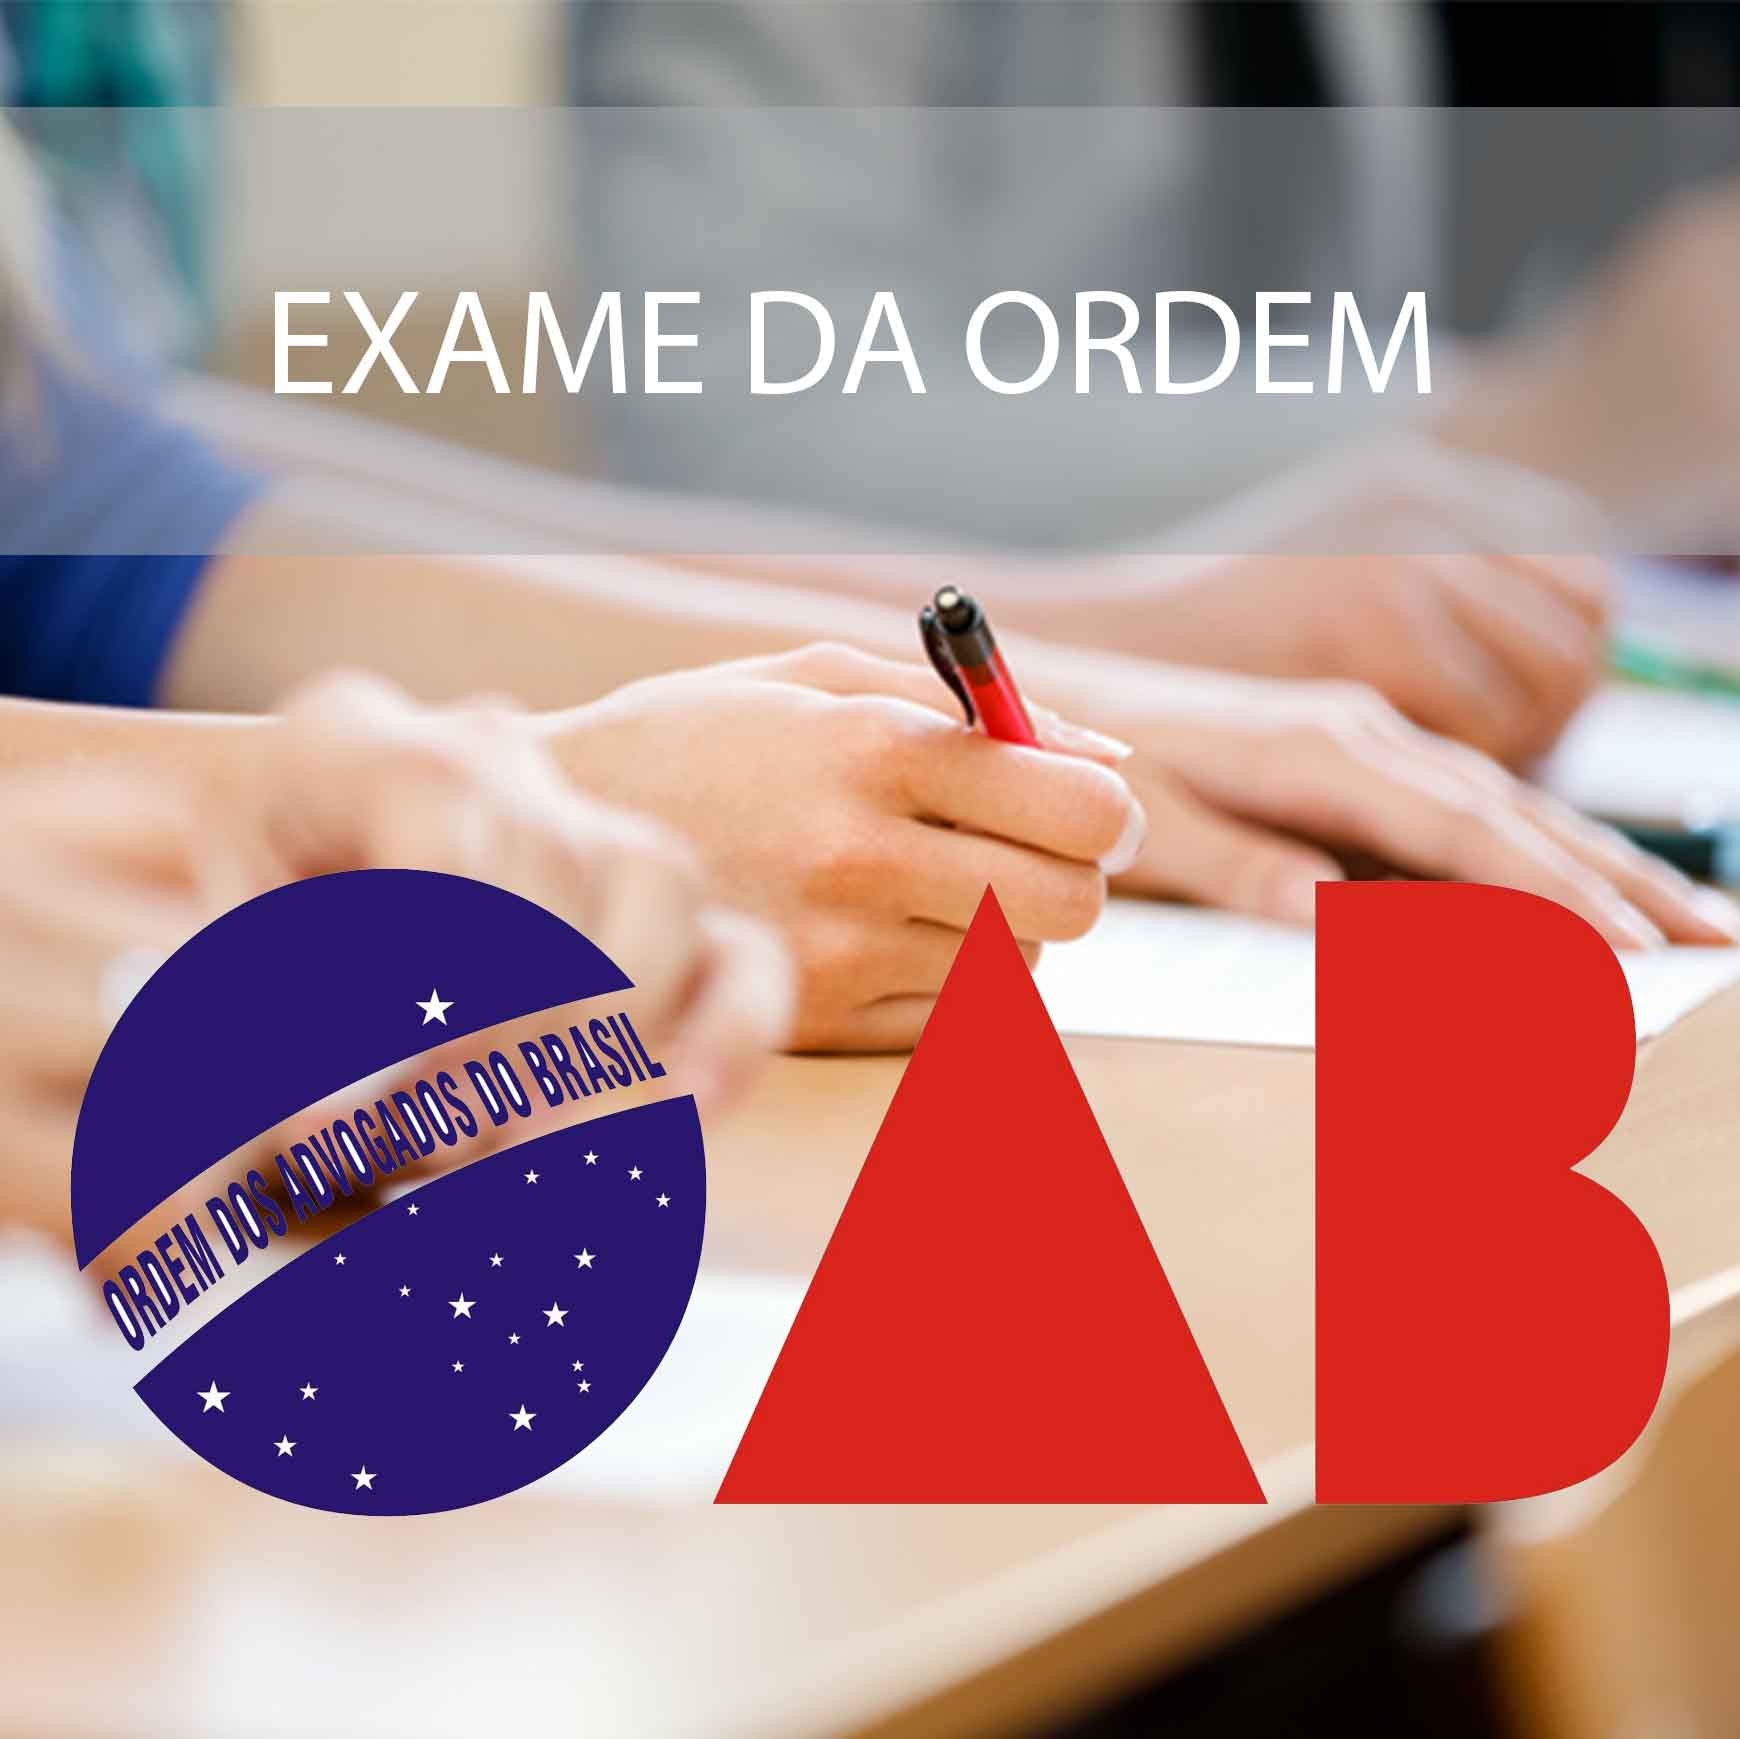 Rateio OAB 39º Exame (XXXIX) - 1ª Fase - Acesso Total - 2023 - CERS